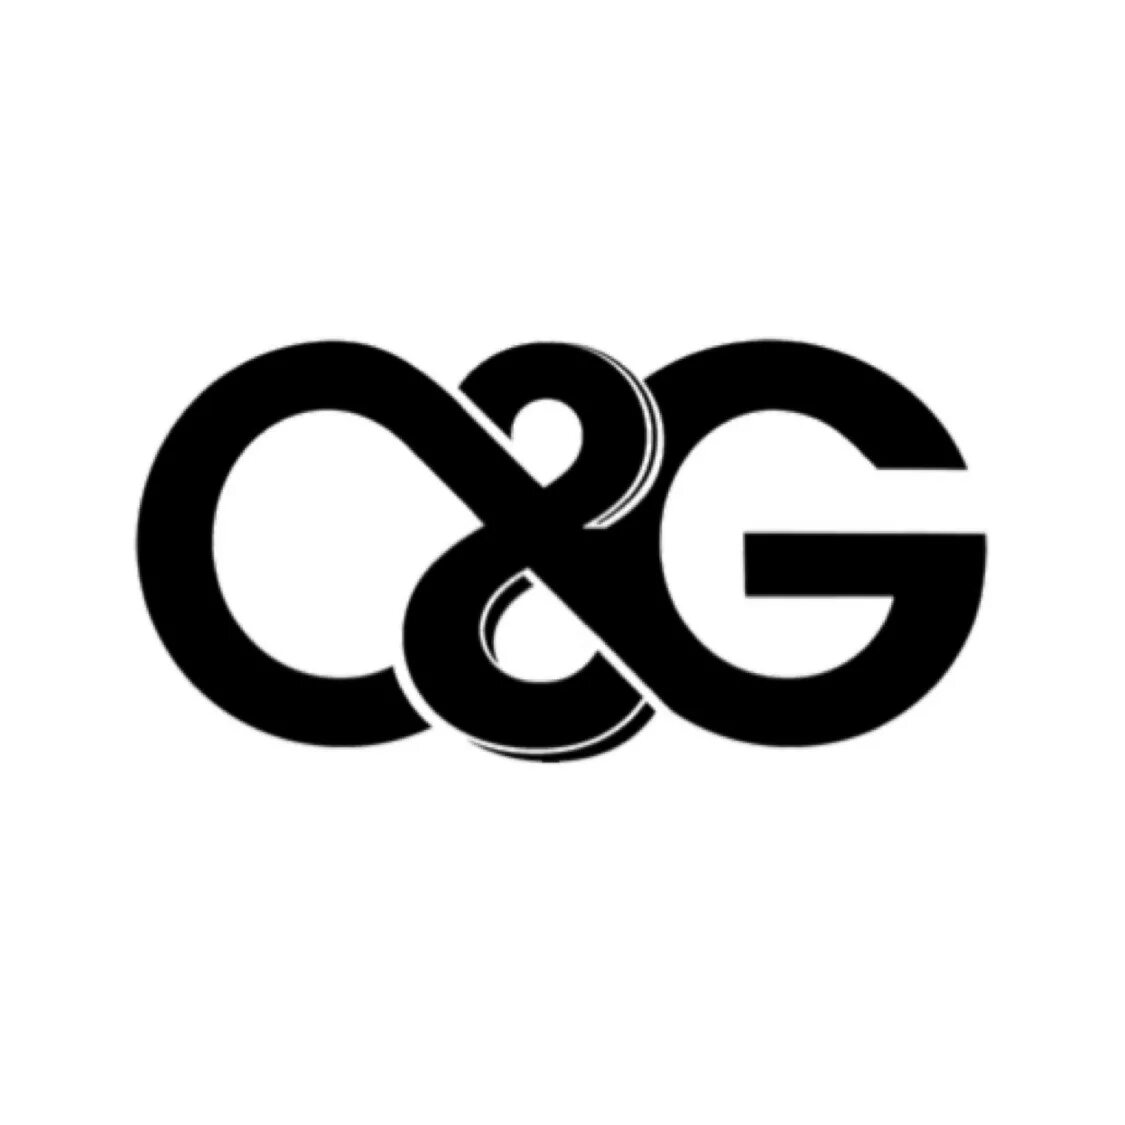 Логотип c c. Логотип g. CG логотип бренда. Логотип с буквами CG.